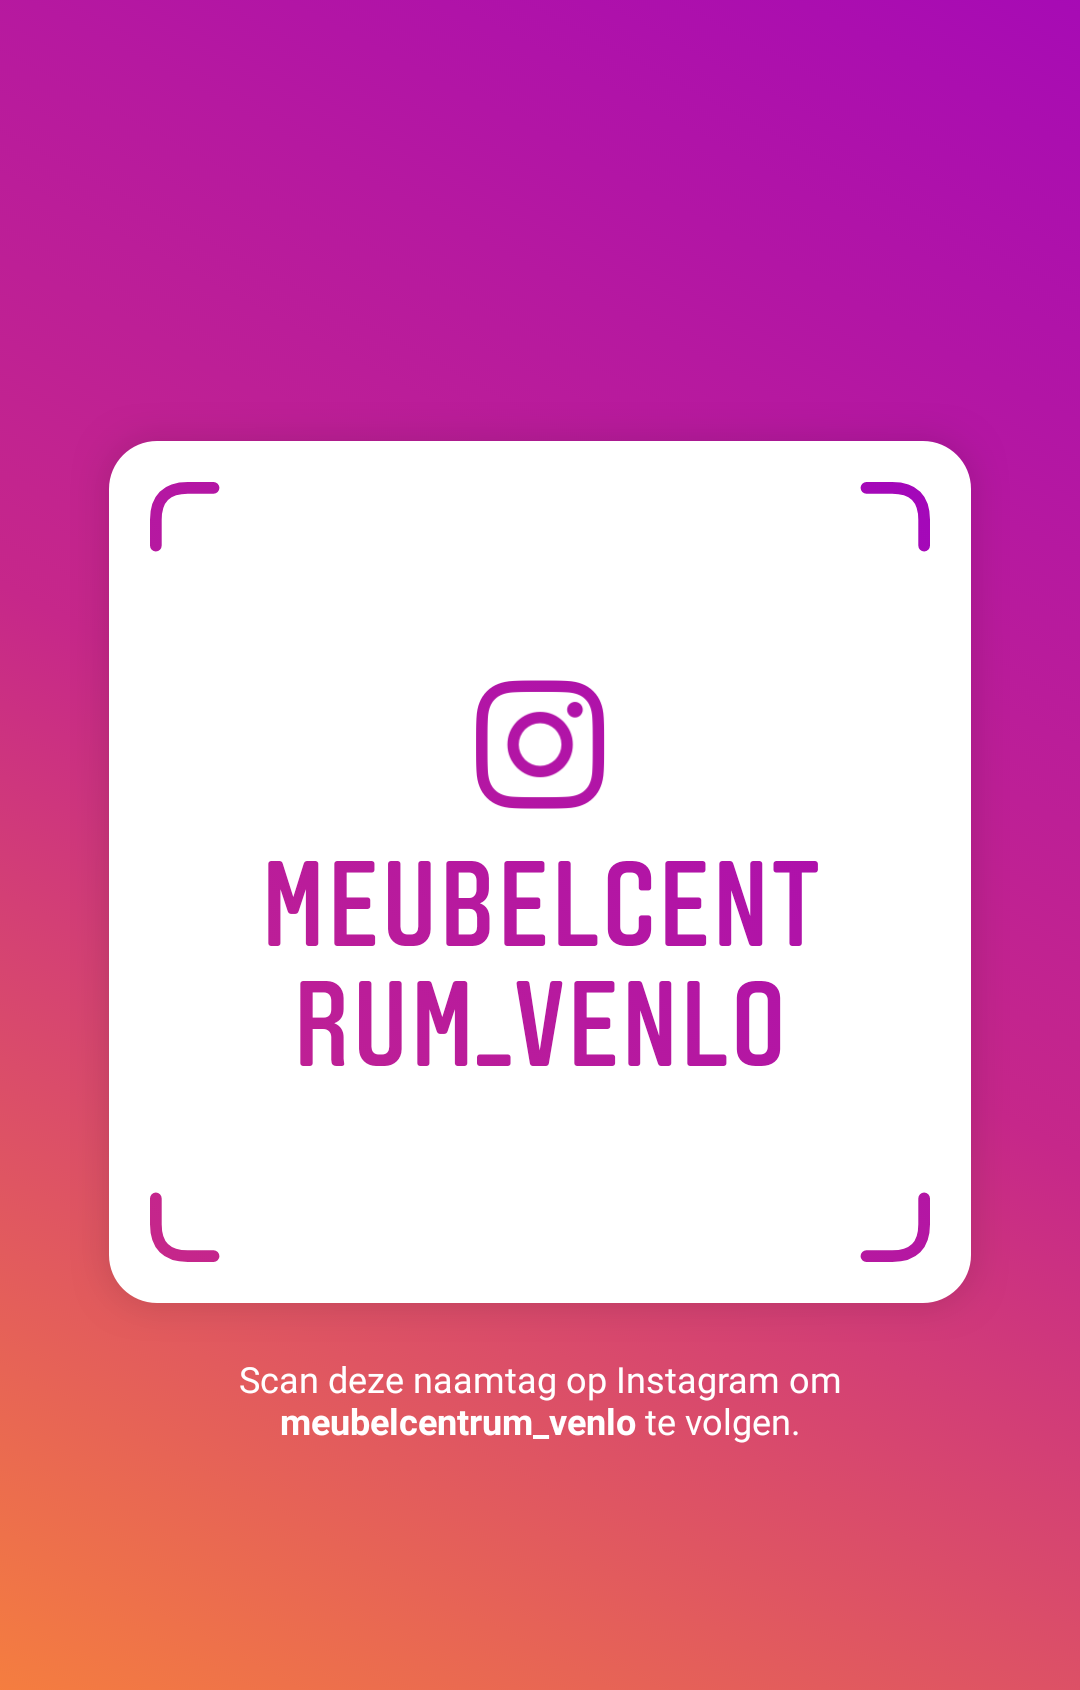 Nametag Instagram